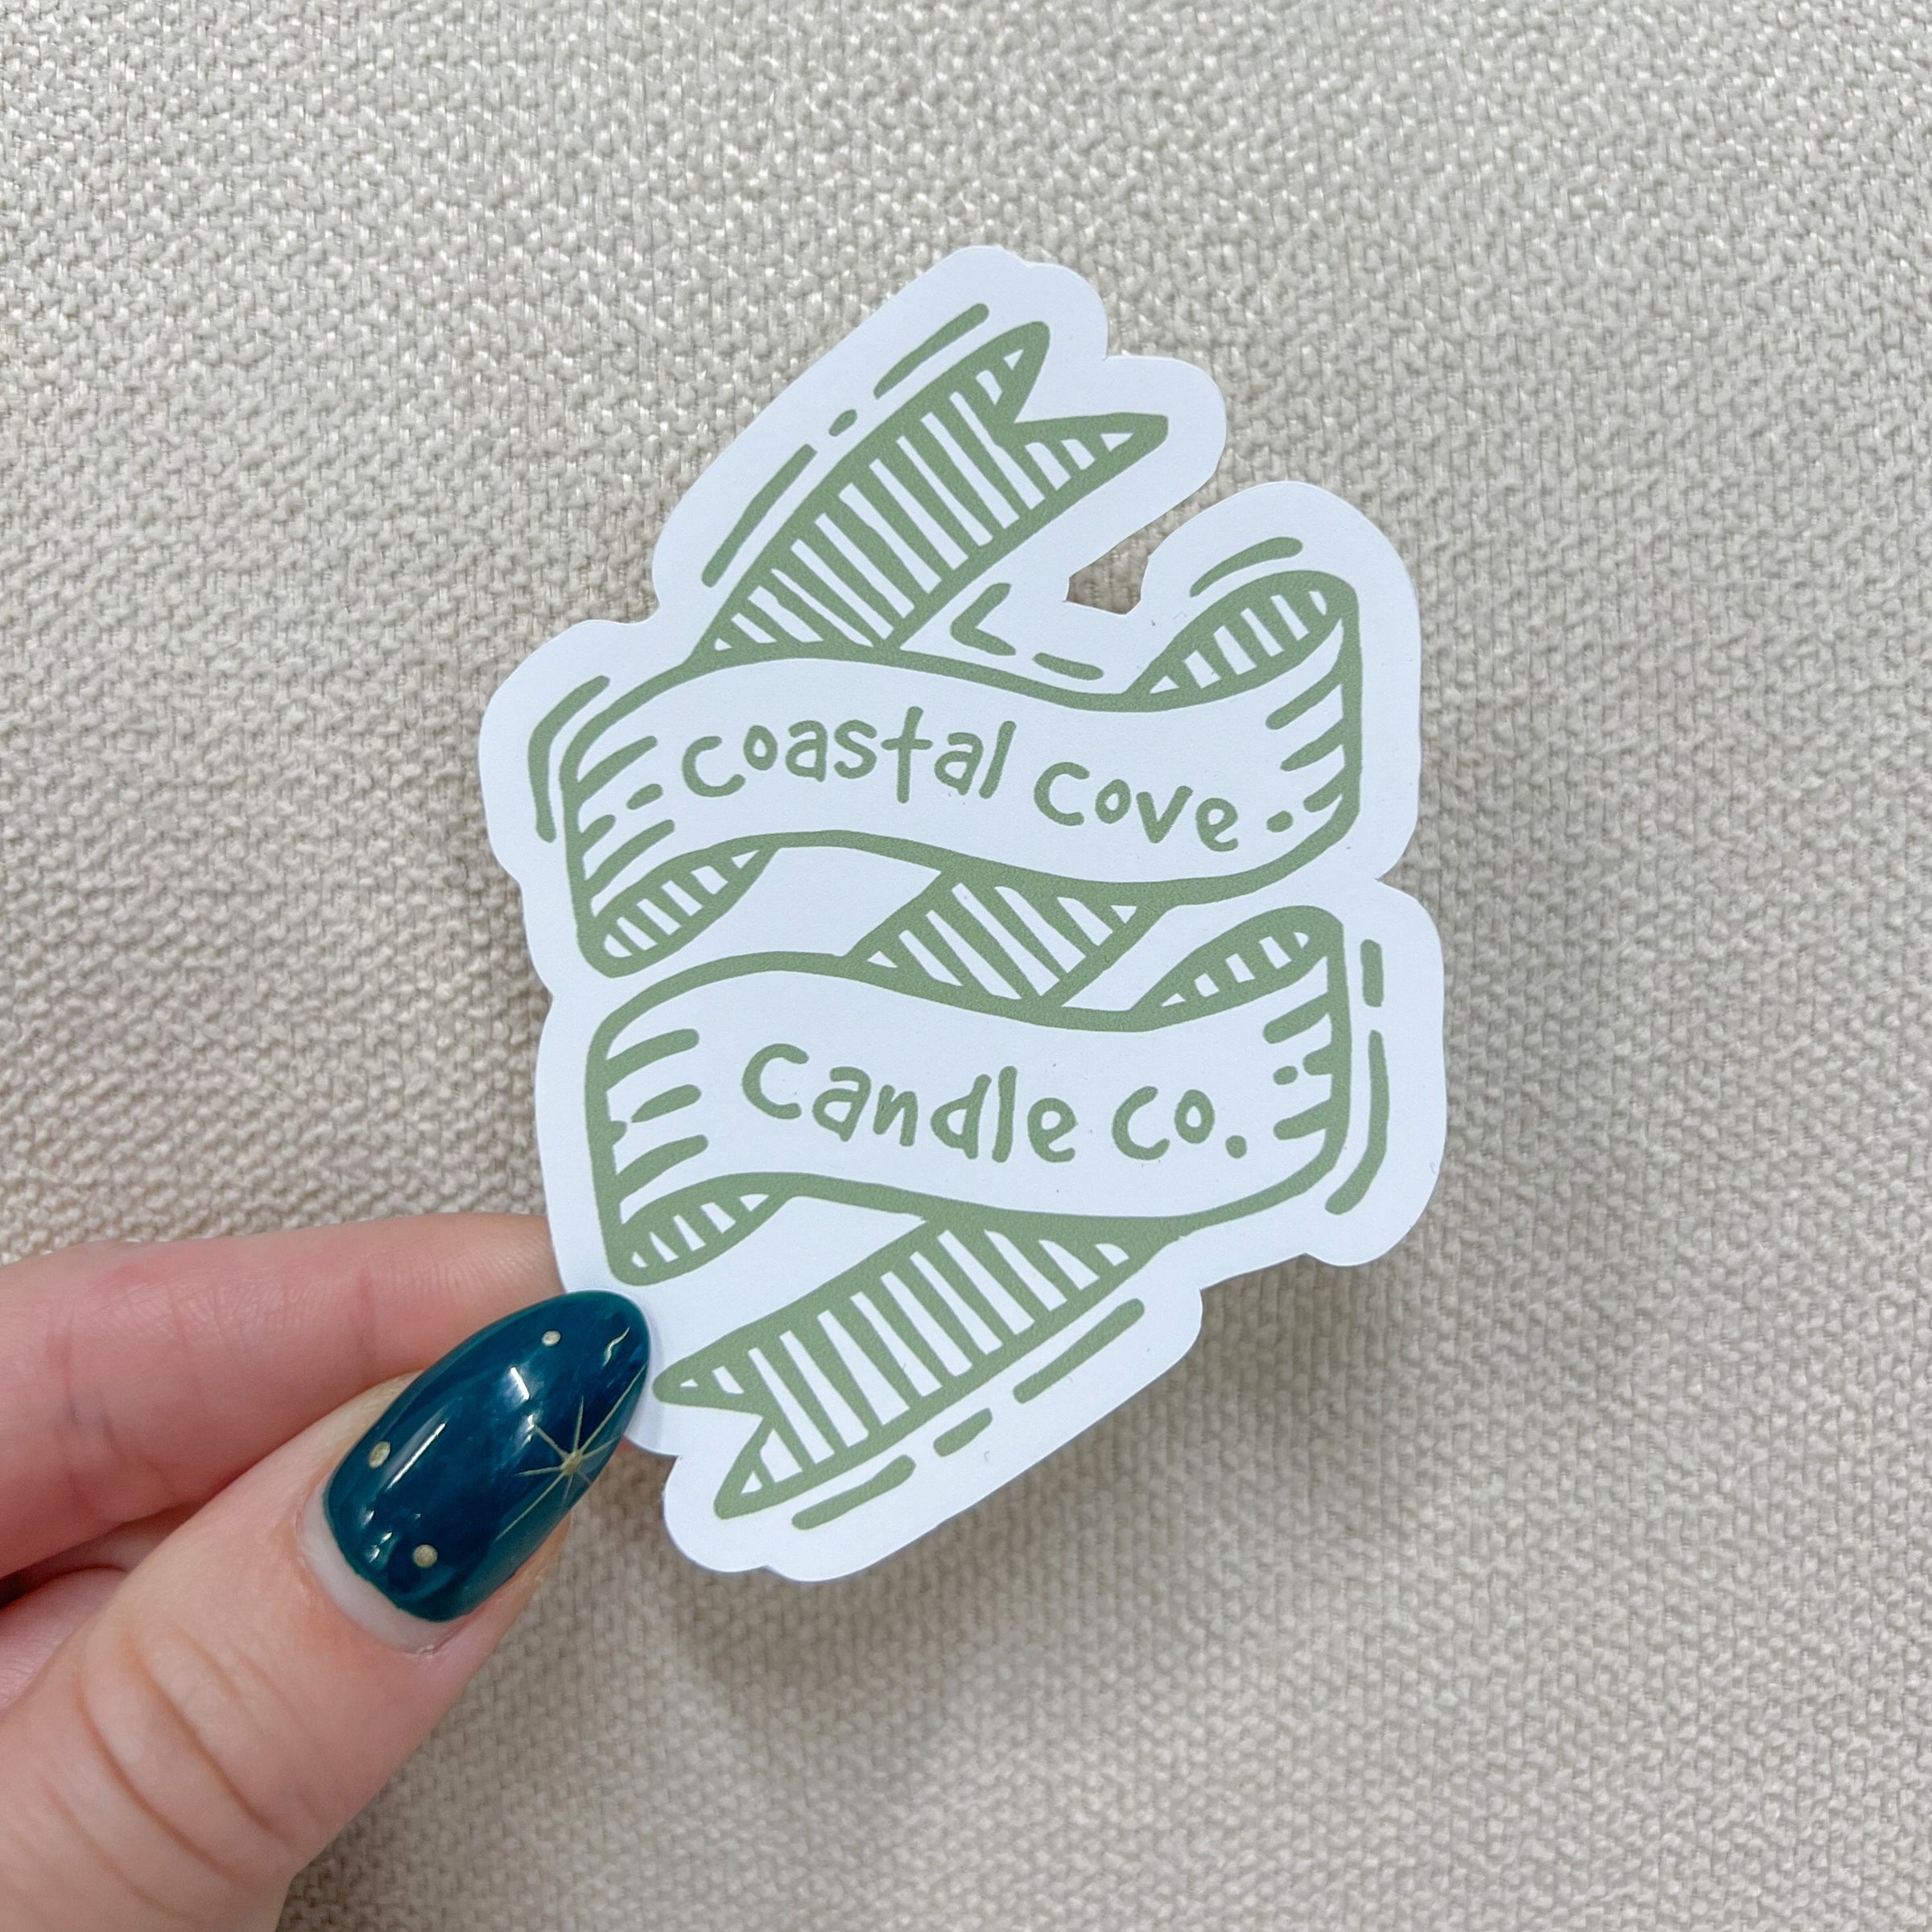 Coastal Cove Candle Co. Green Ribbon Sticker